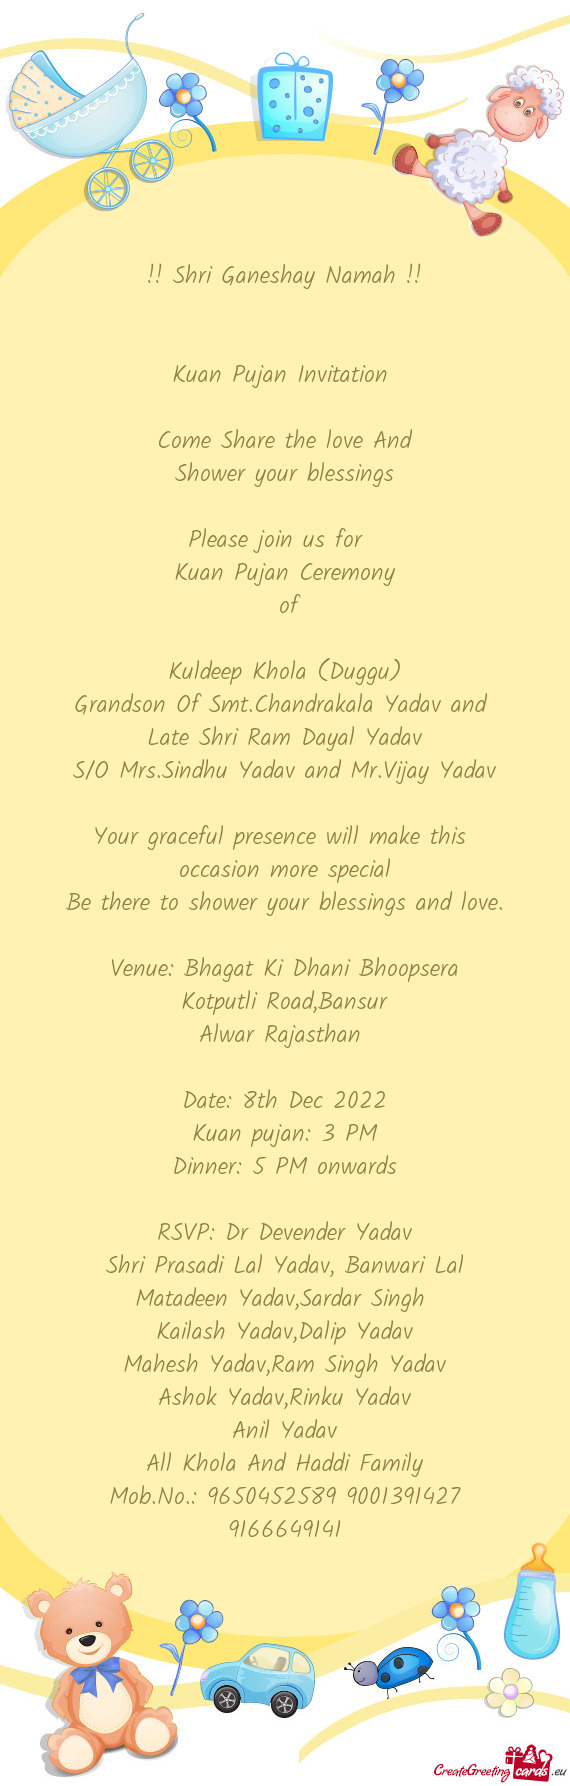 Venue: Bhagat Ki Dhani Bhoopsera